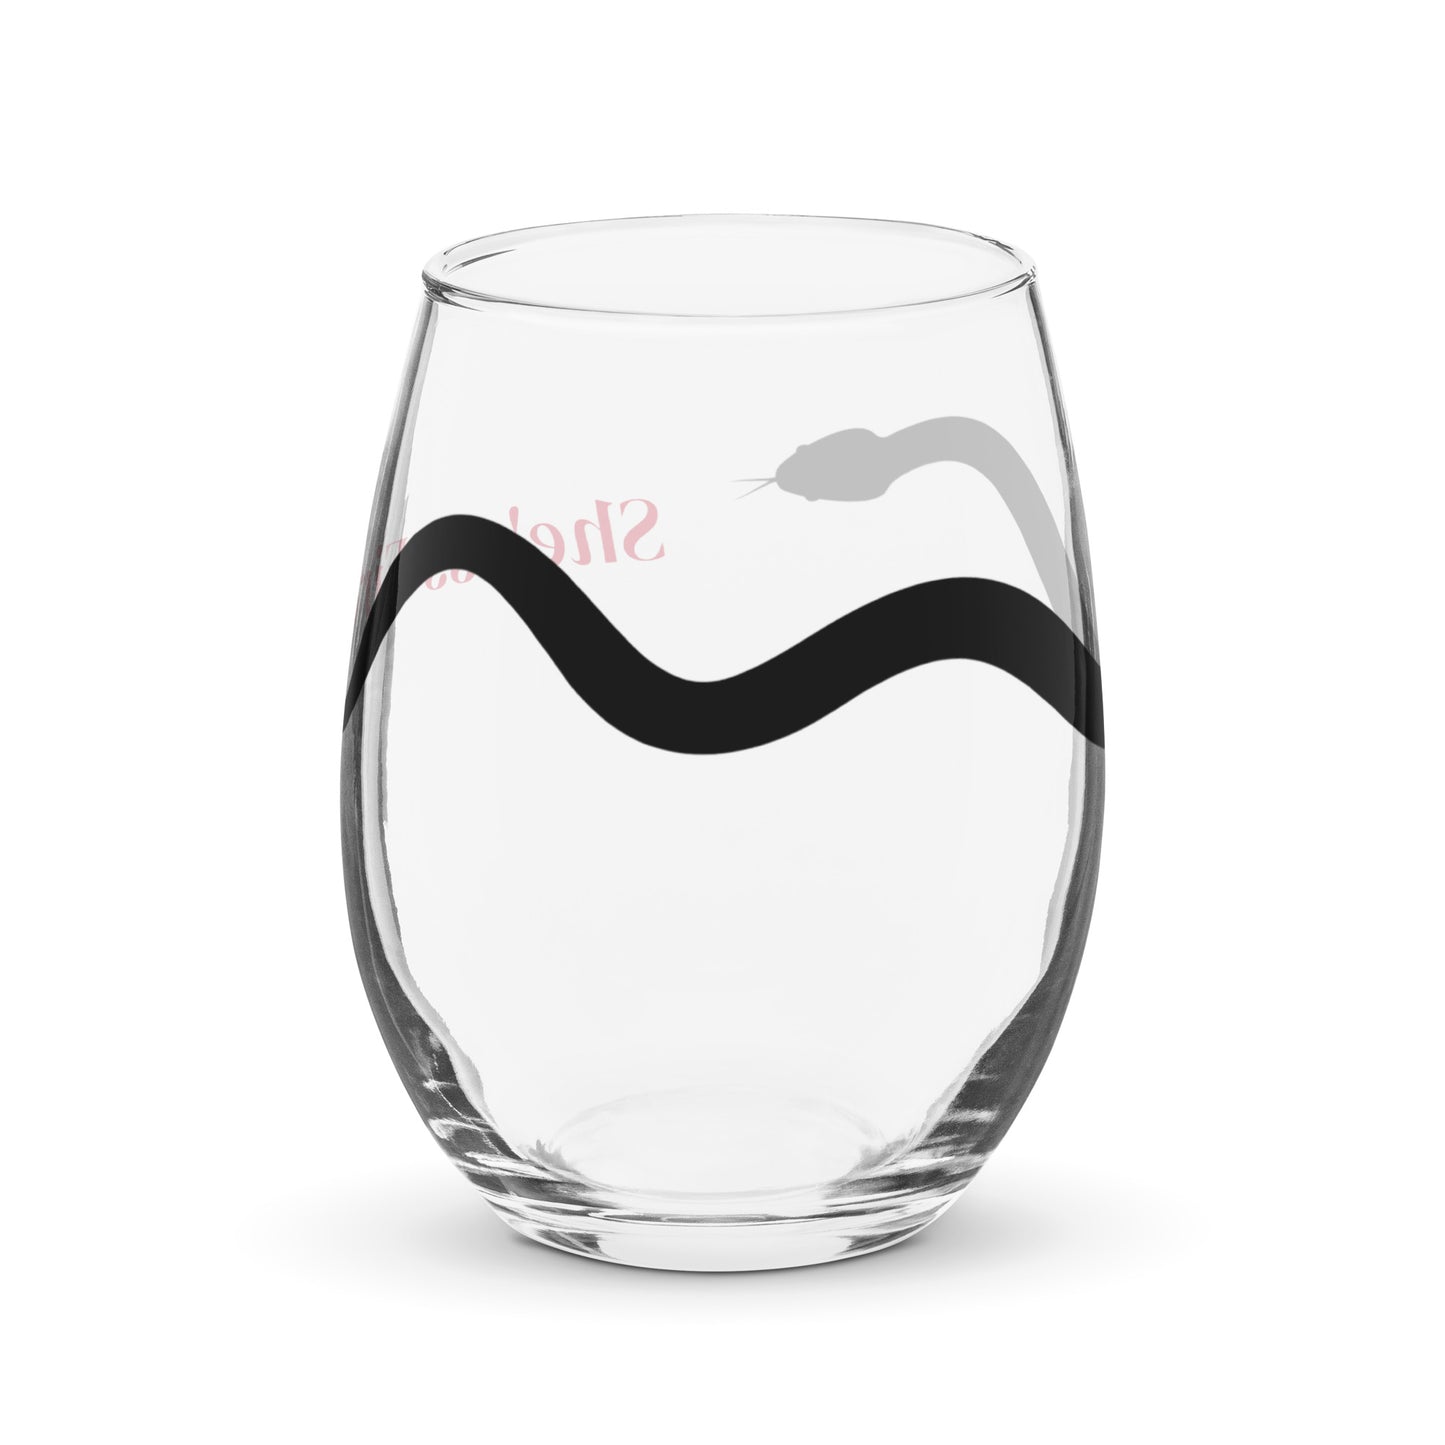 Dirty Blood - Larisa's Favorite Wineglass!